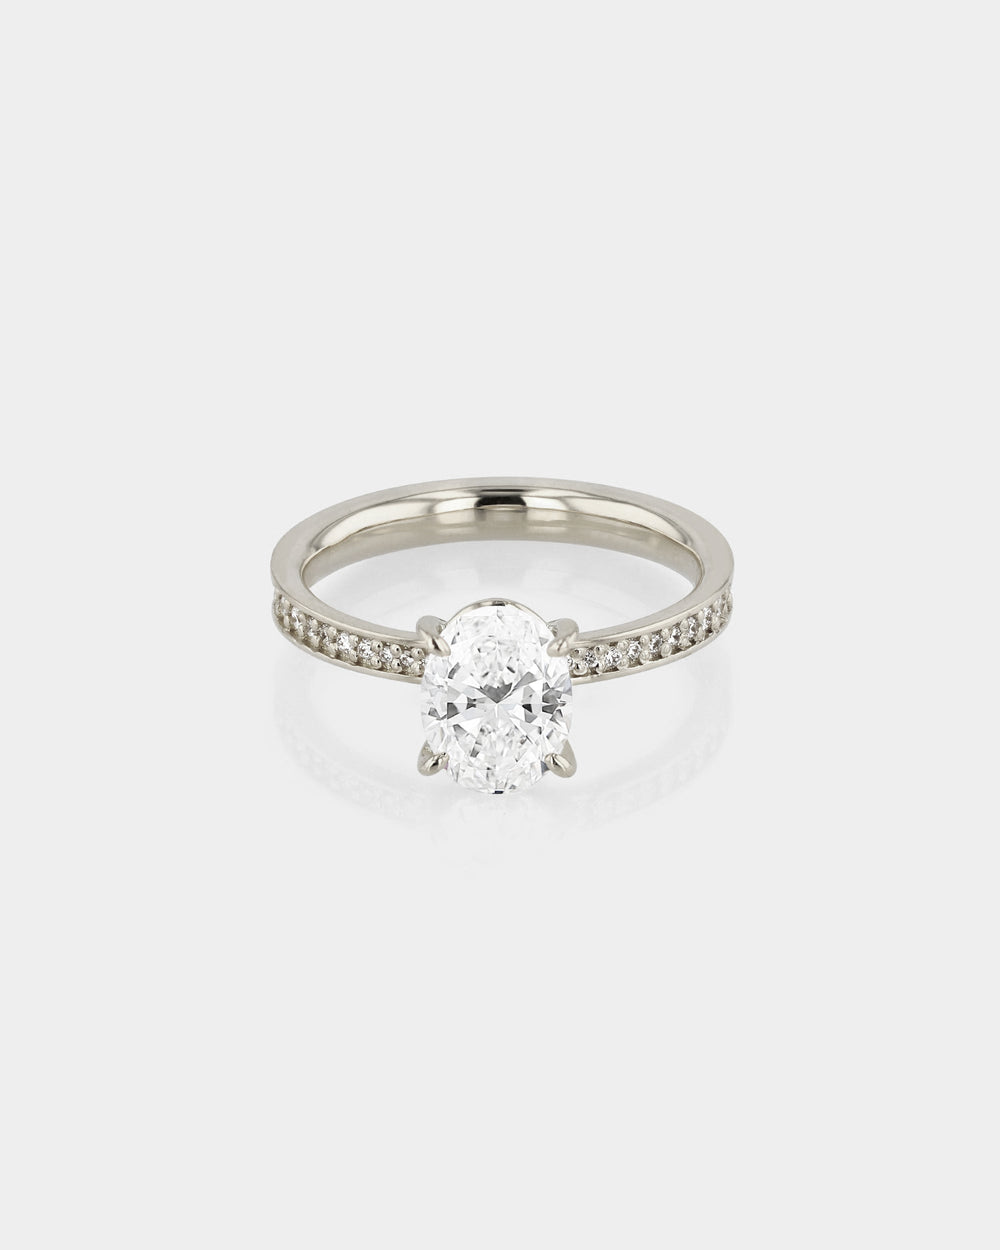 Oval Eternity Diamond Engagement Ring by Sarah & Sebastian